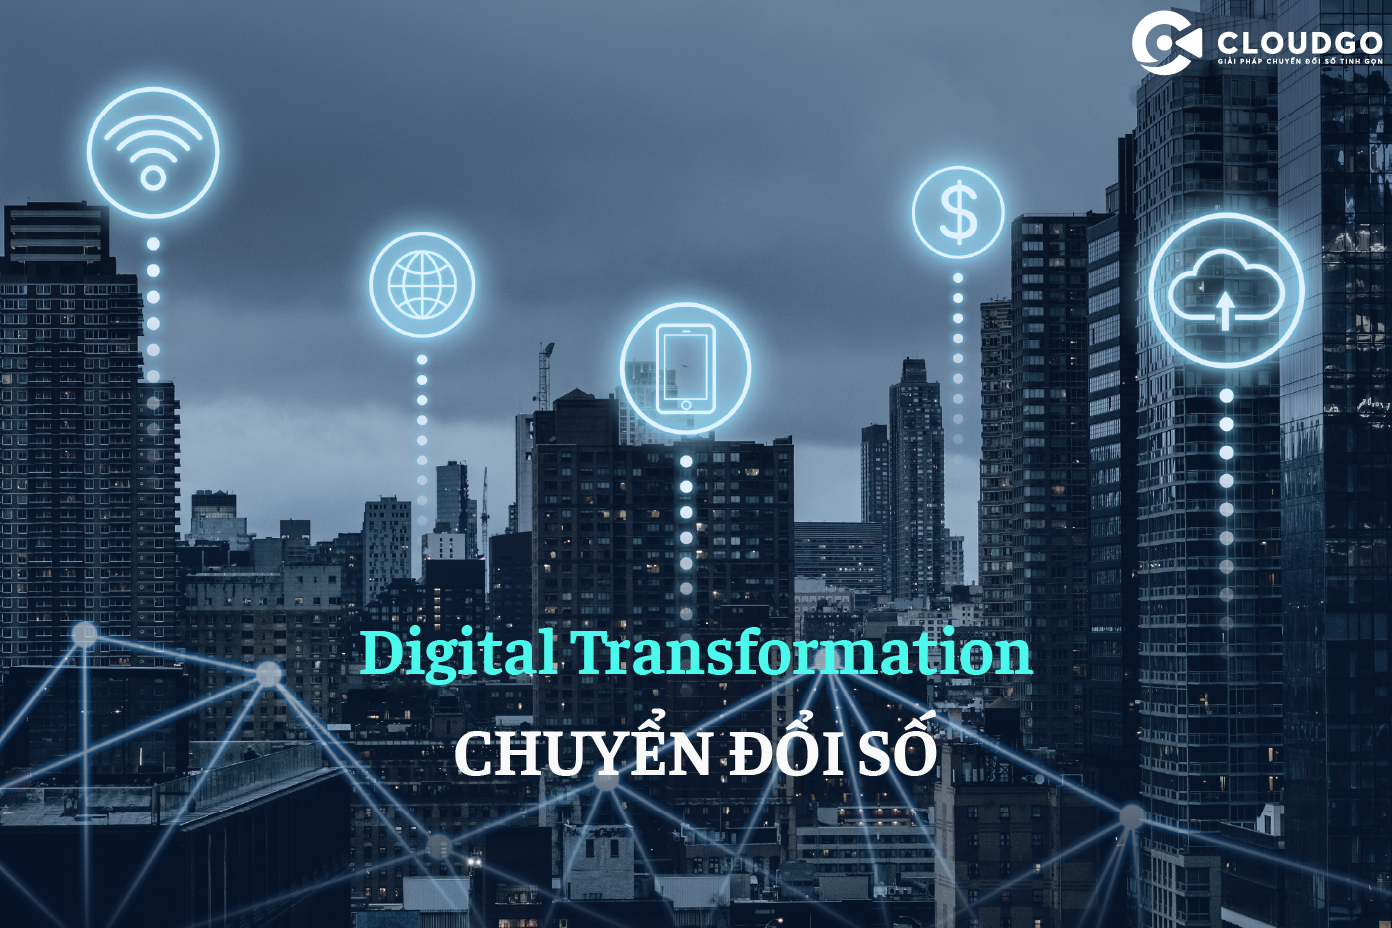 Chuyển đổi số (Digital Transformation)